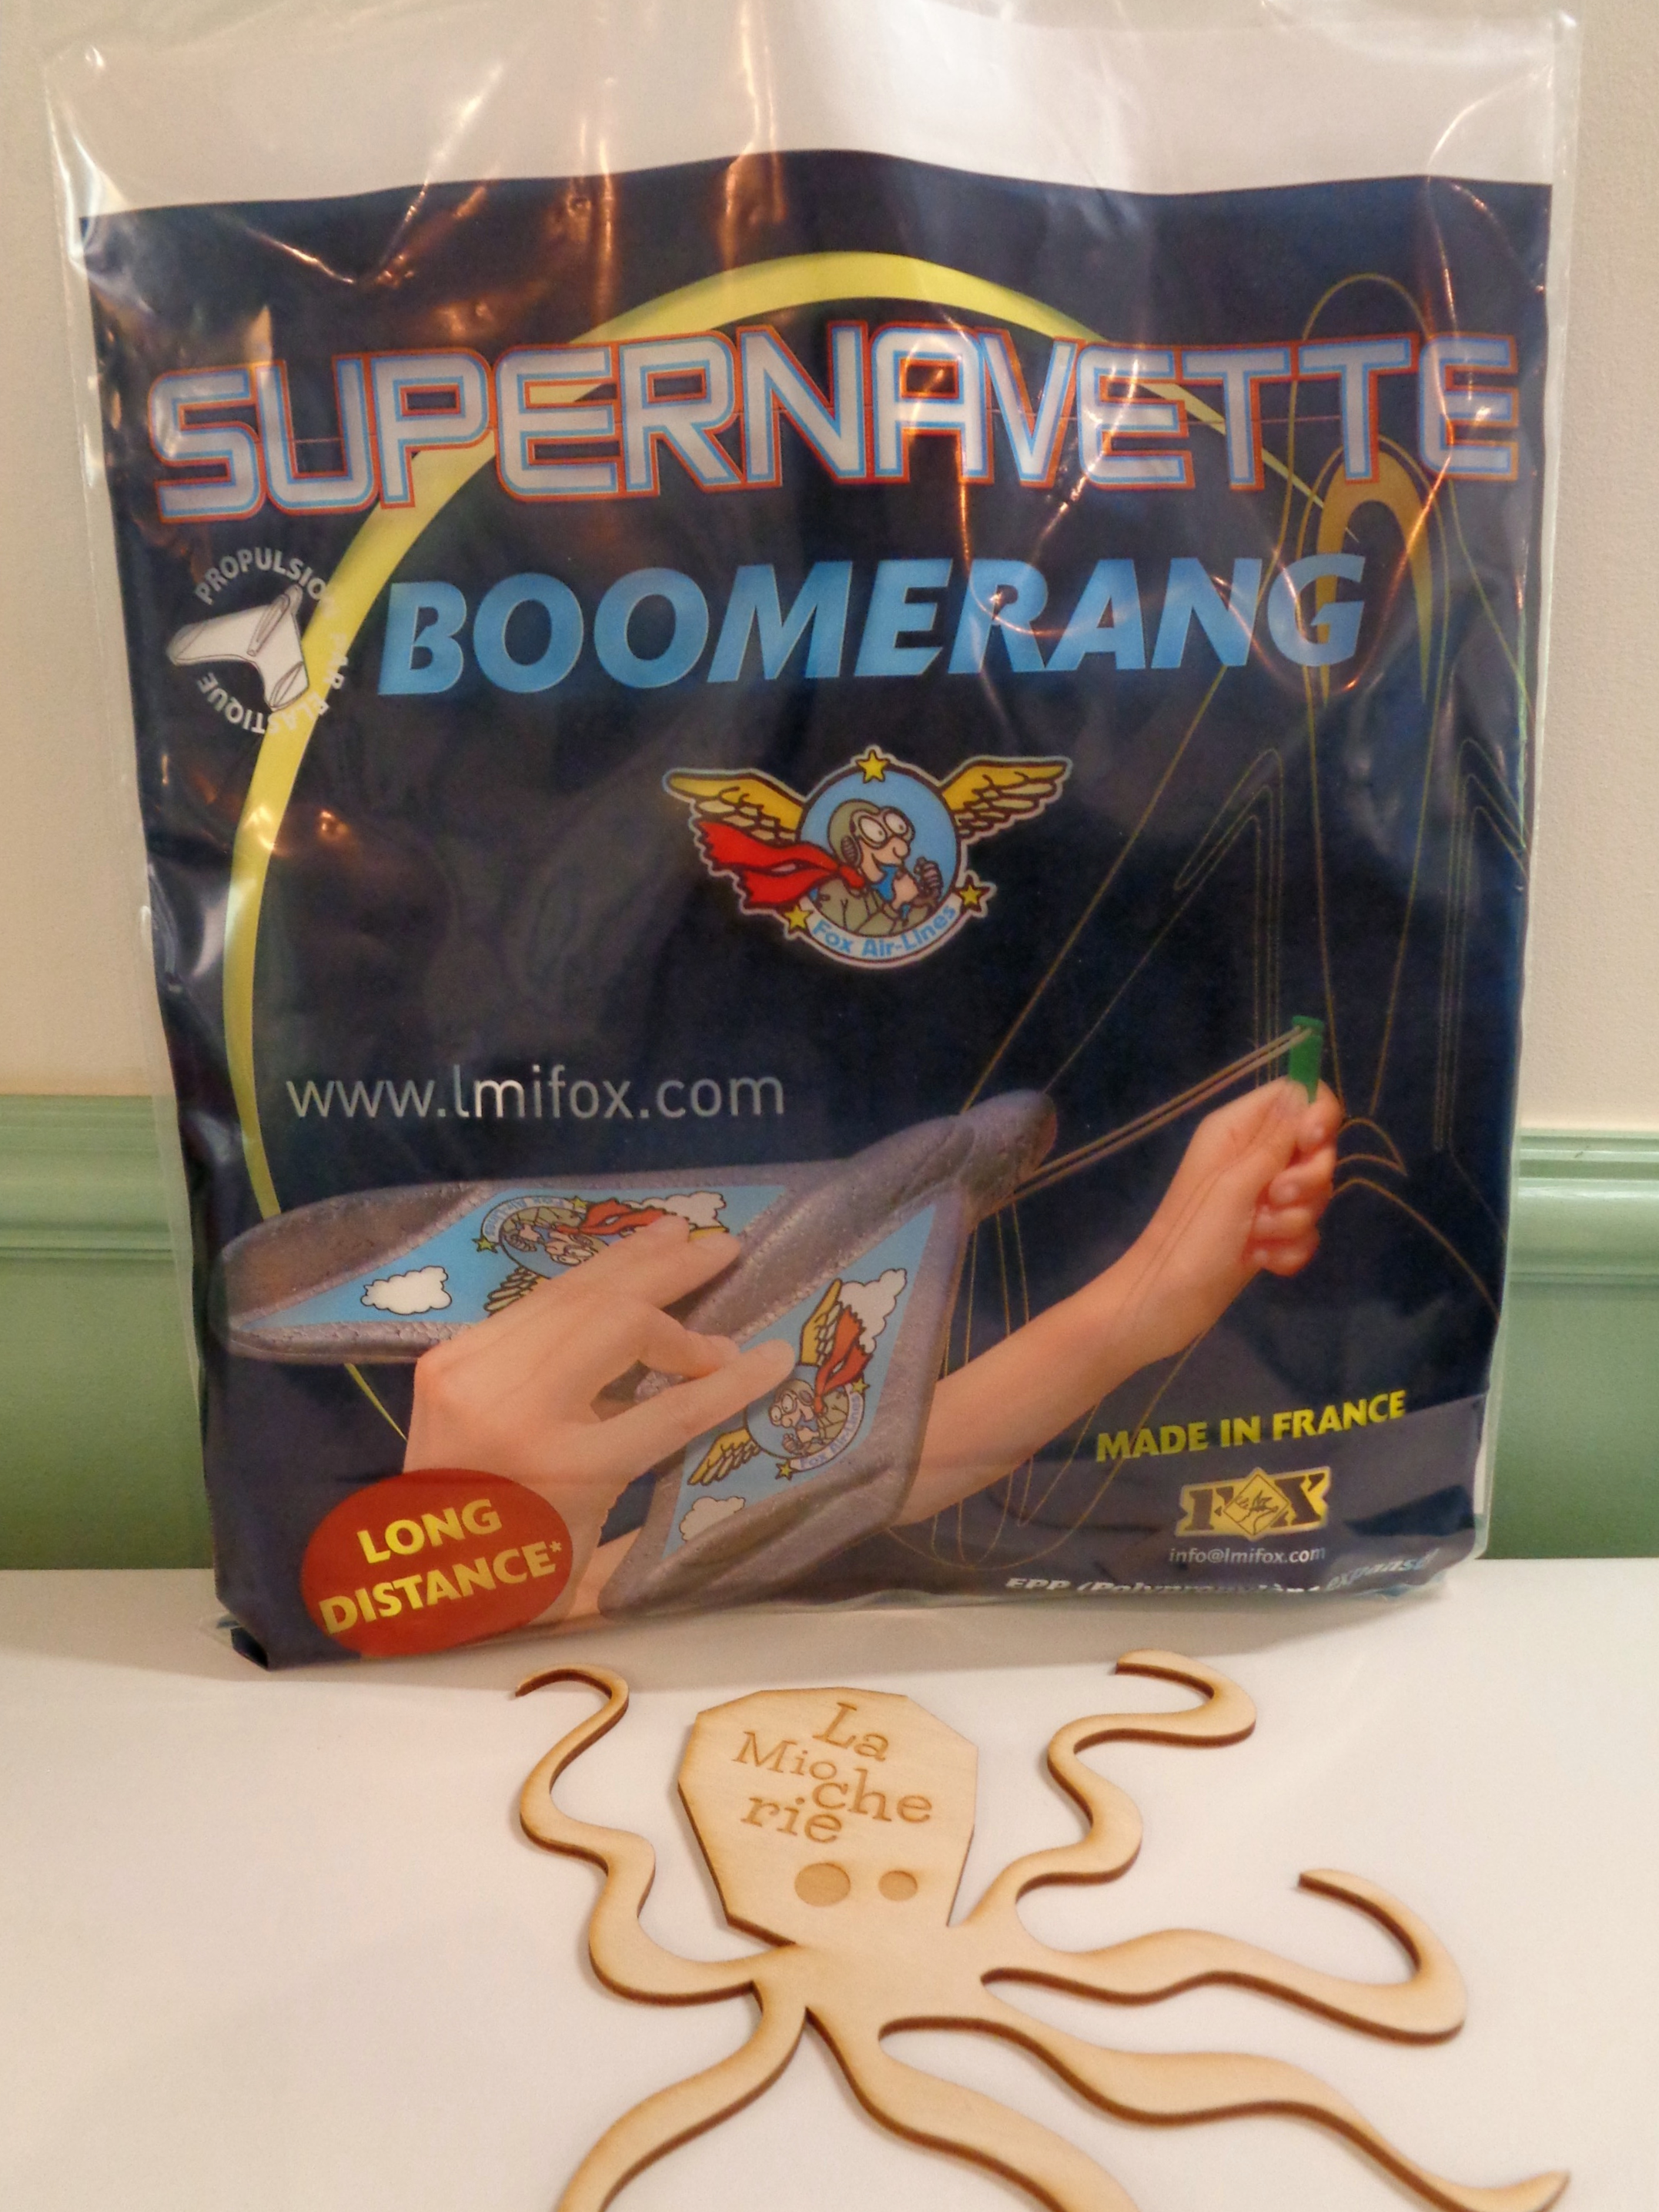 Super Navette Boomerang - Made in France